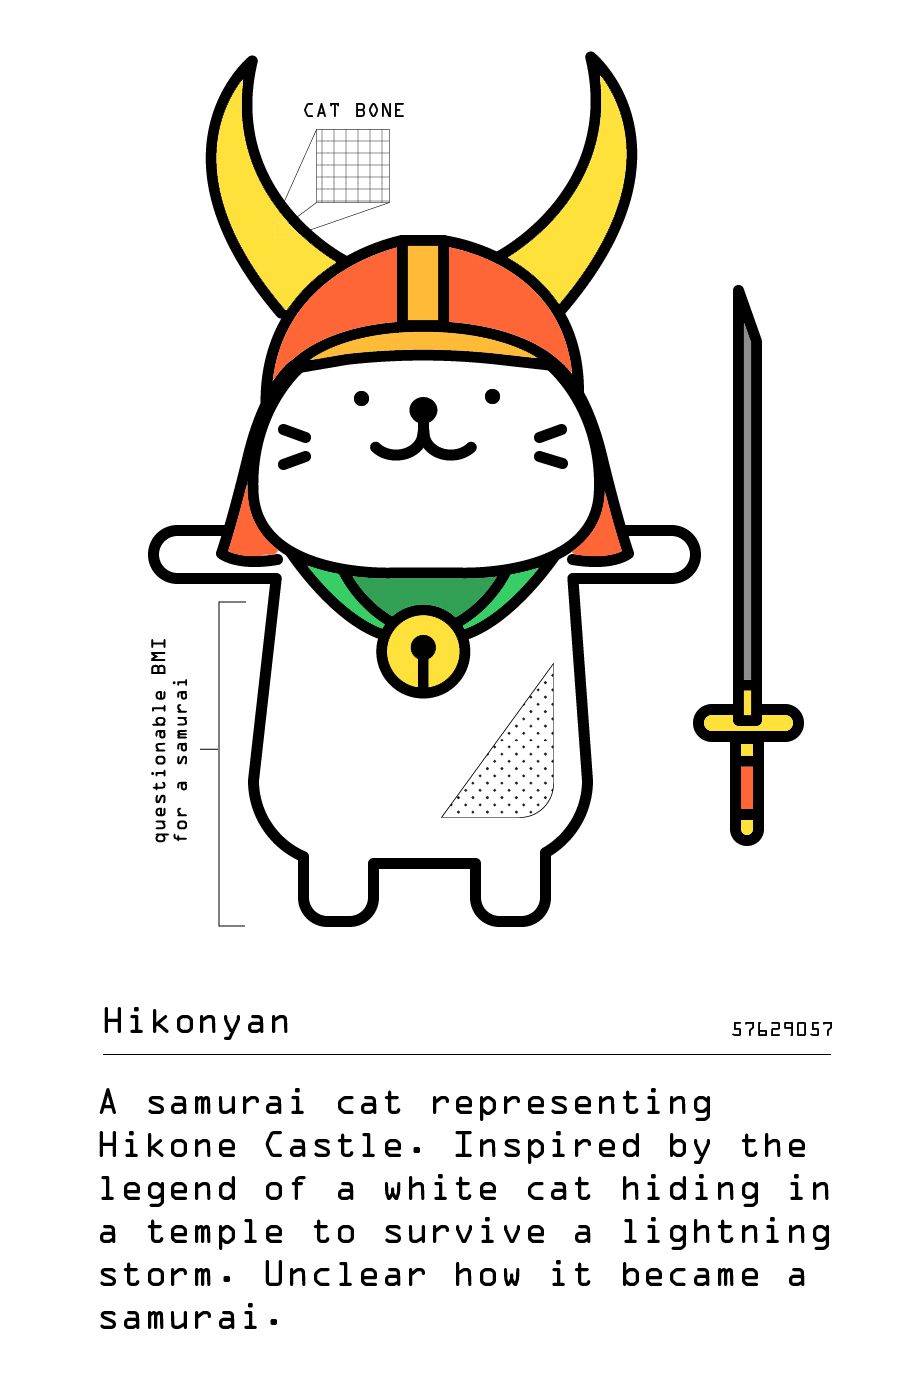 scientific illustration of Hikonyan the samurai cat mascot who represents Hikone Castle and its government